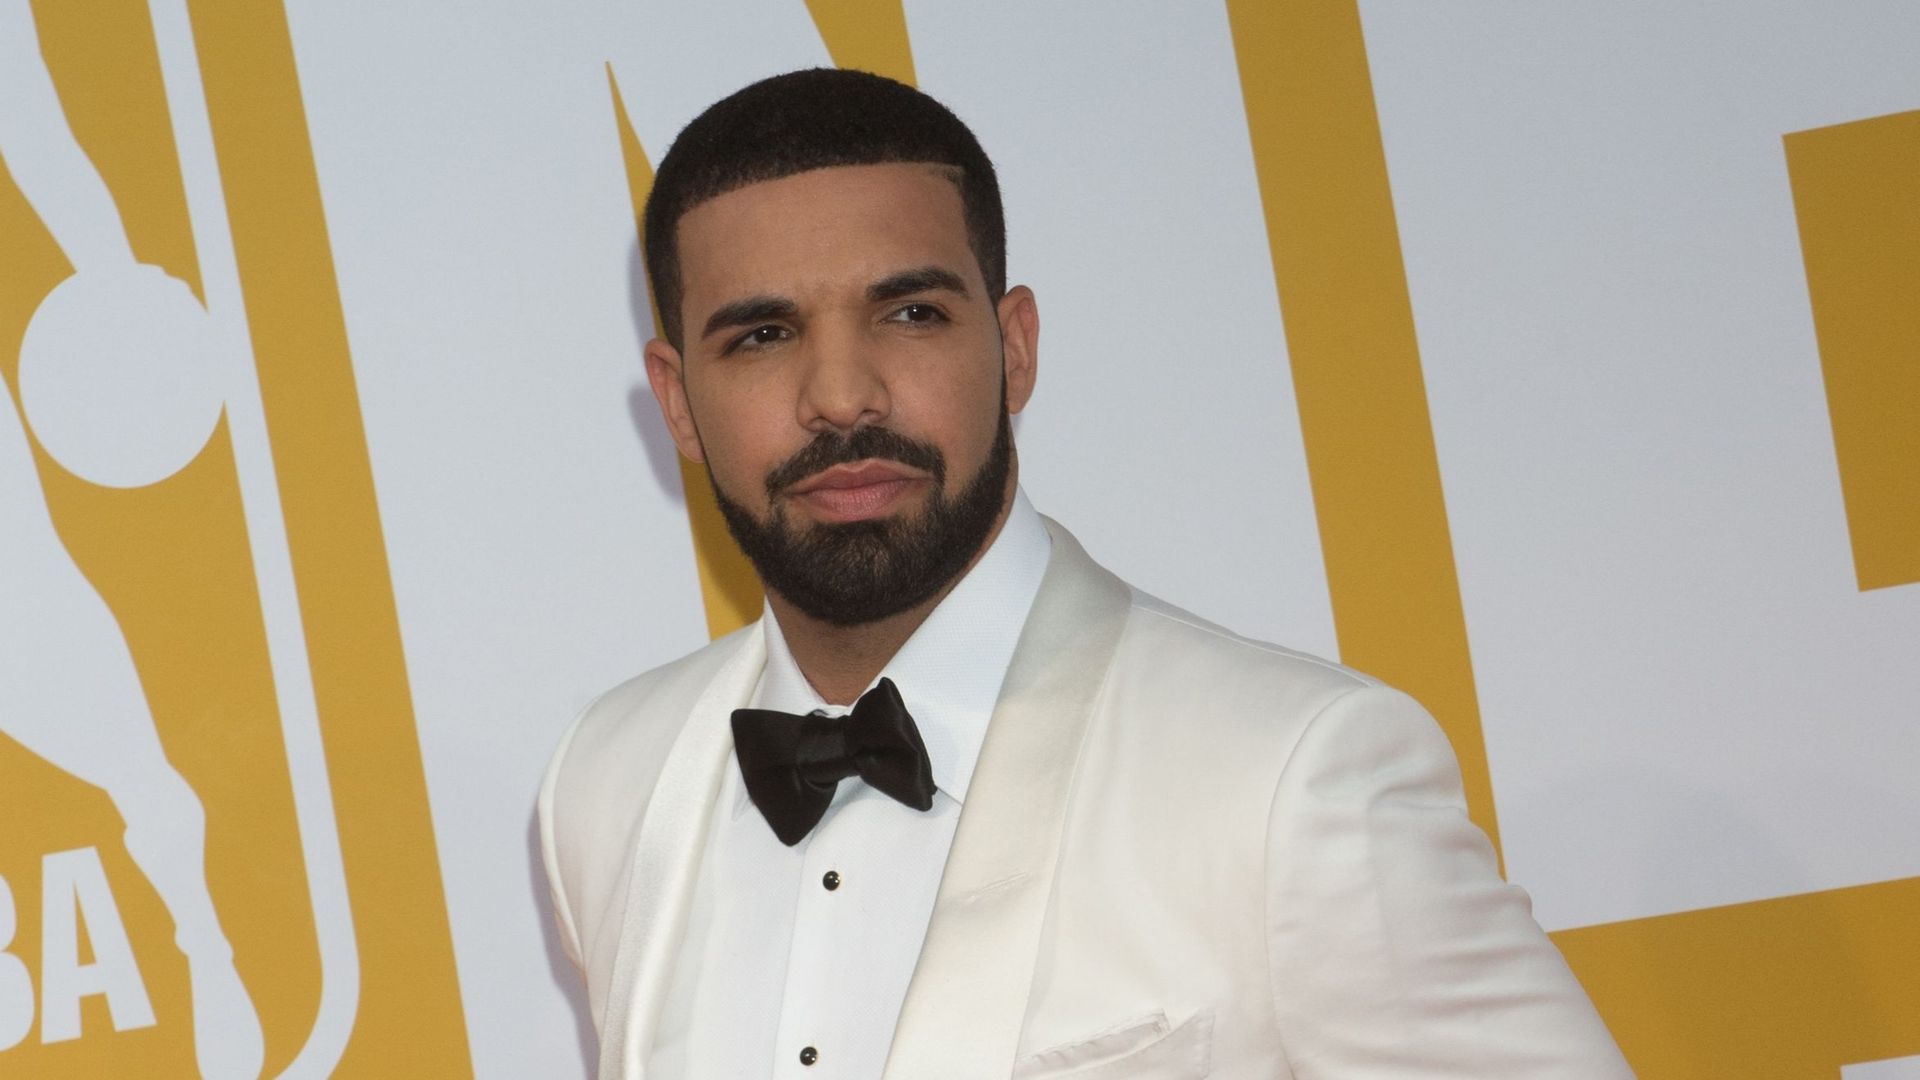 Drake lors des NBA Awards à Basketball City, le 26 juin 2017 à New York.